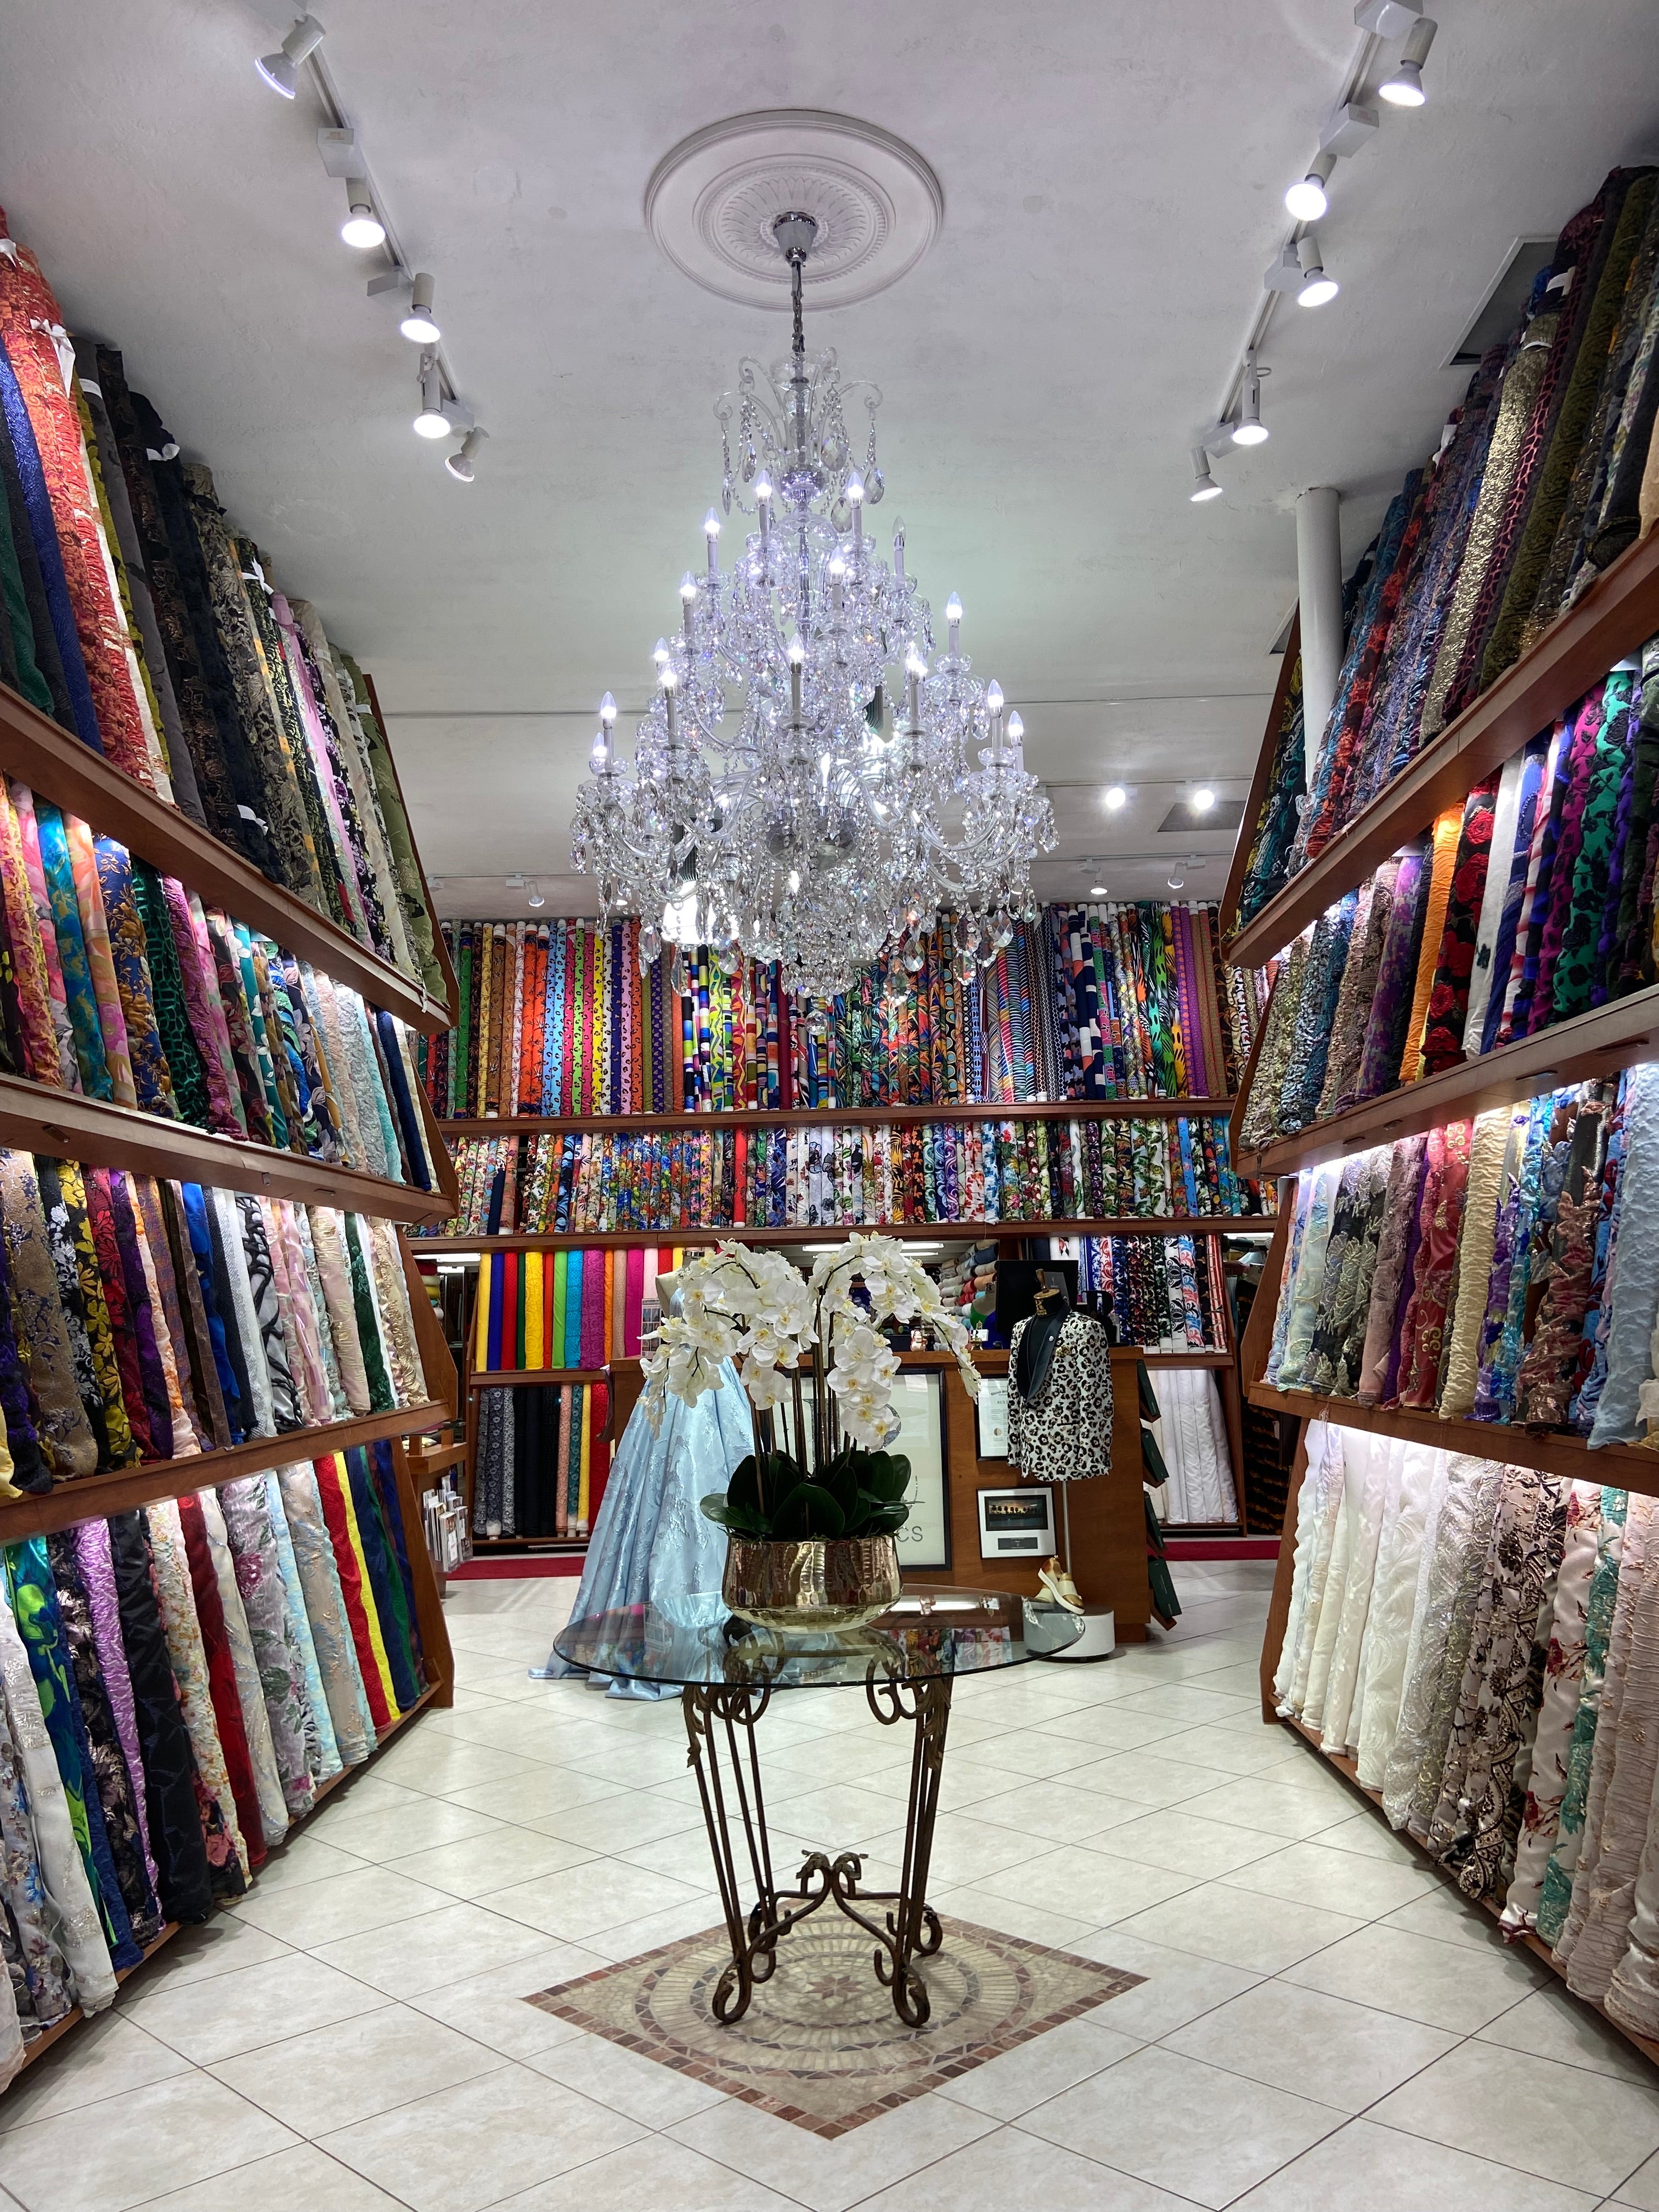 A blog post written by fashion student, Gianna Pignatello - Explore Fabric Stores in Miami